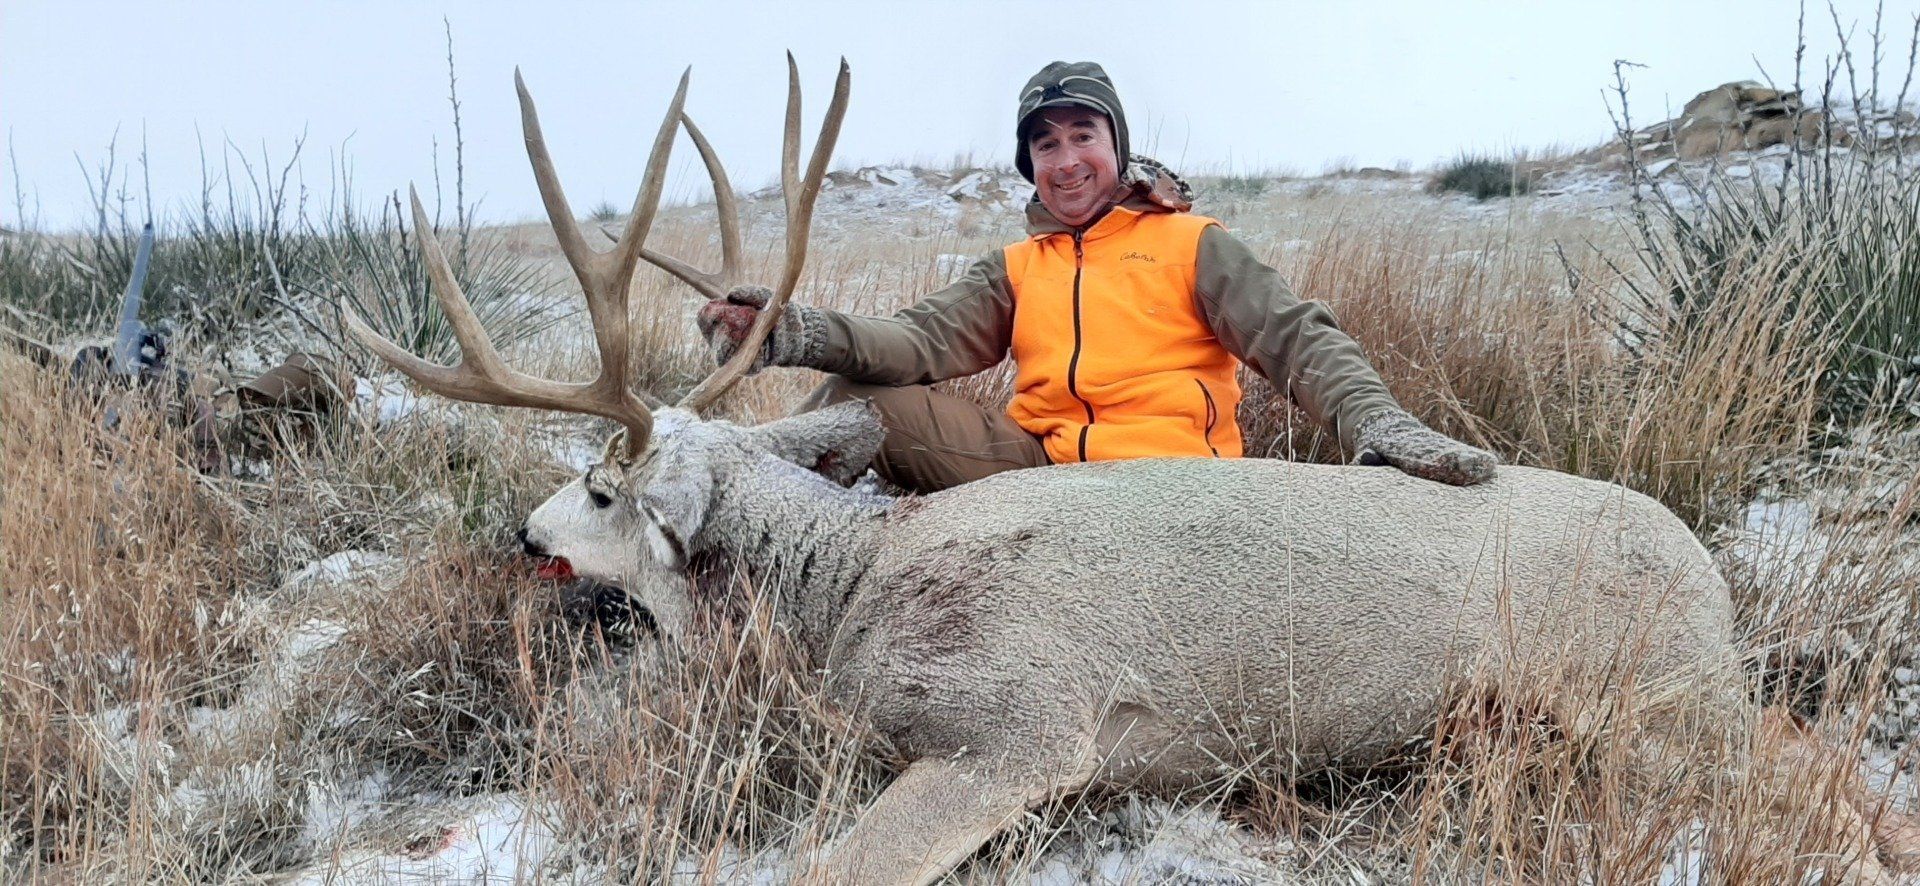 Montana big game hunting outfitter Mule deer hunting